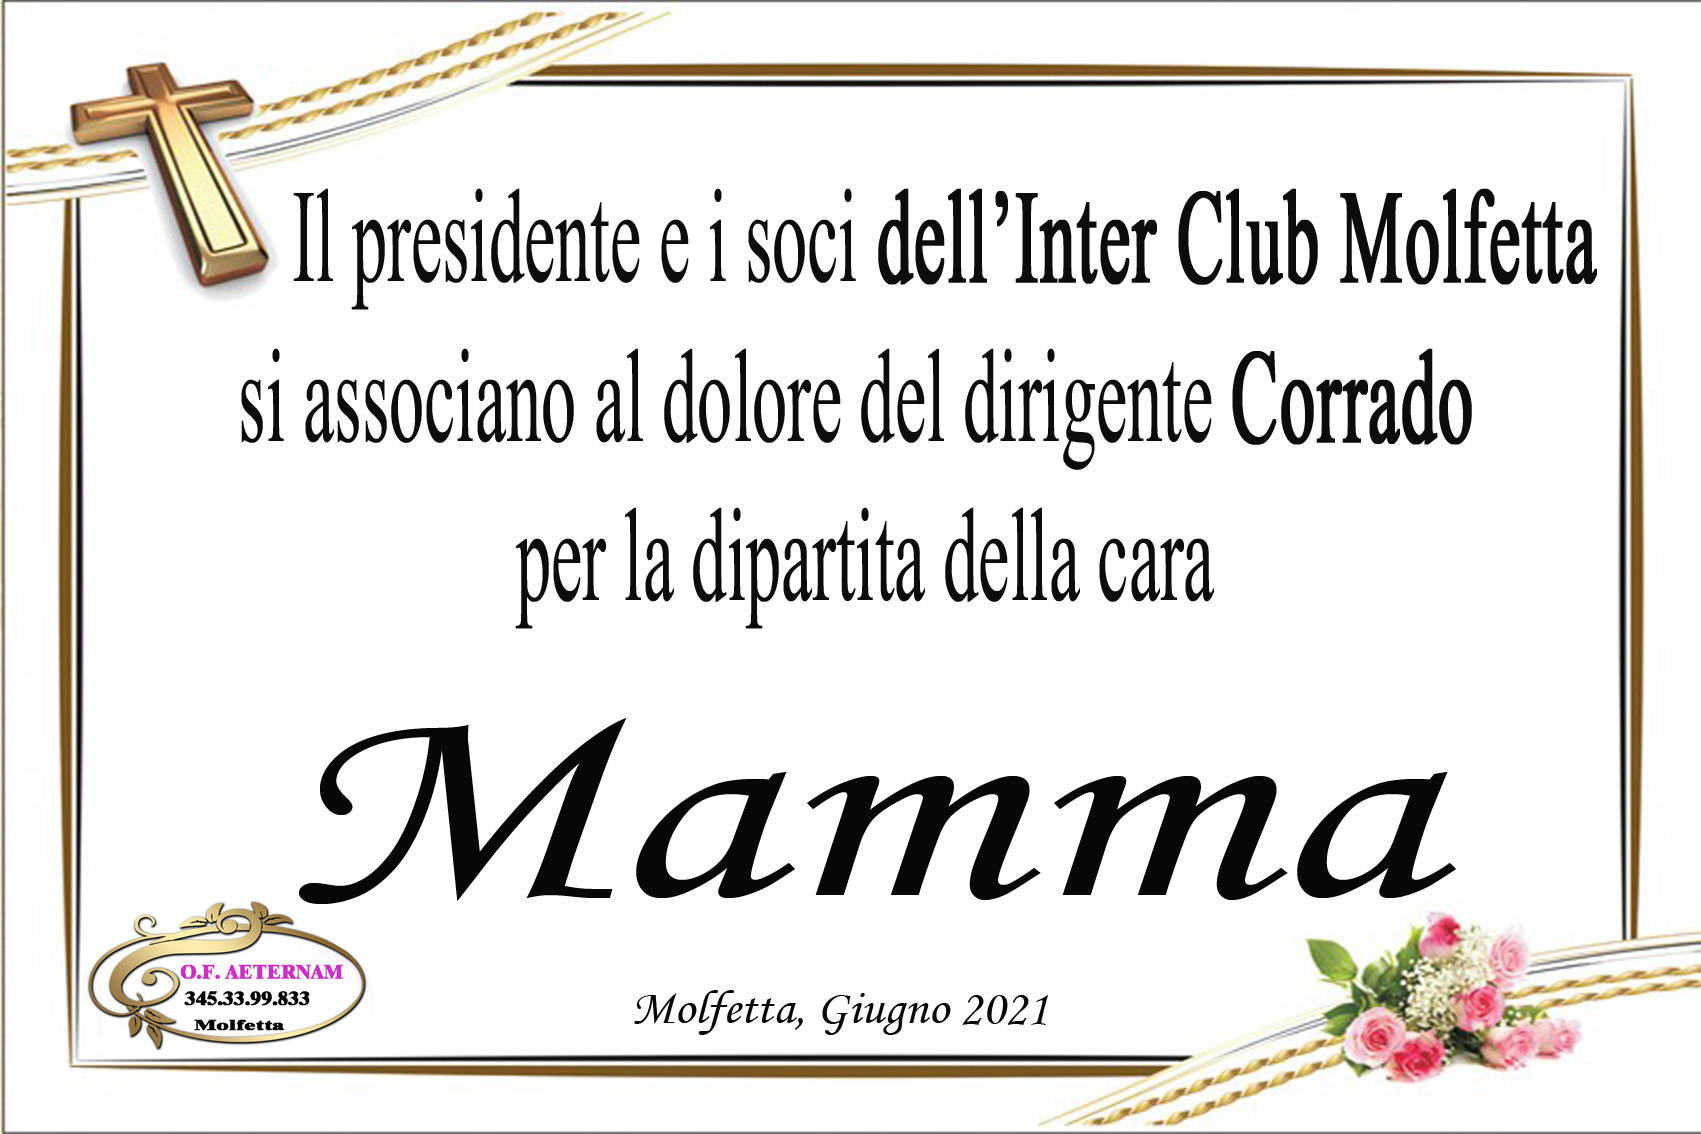 Inter Club Molfetta - Presidente e soci